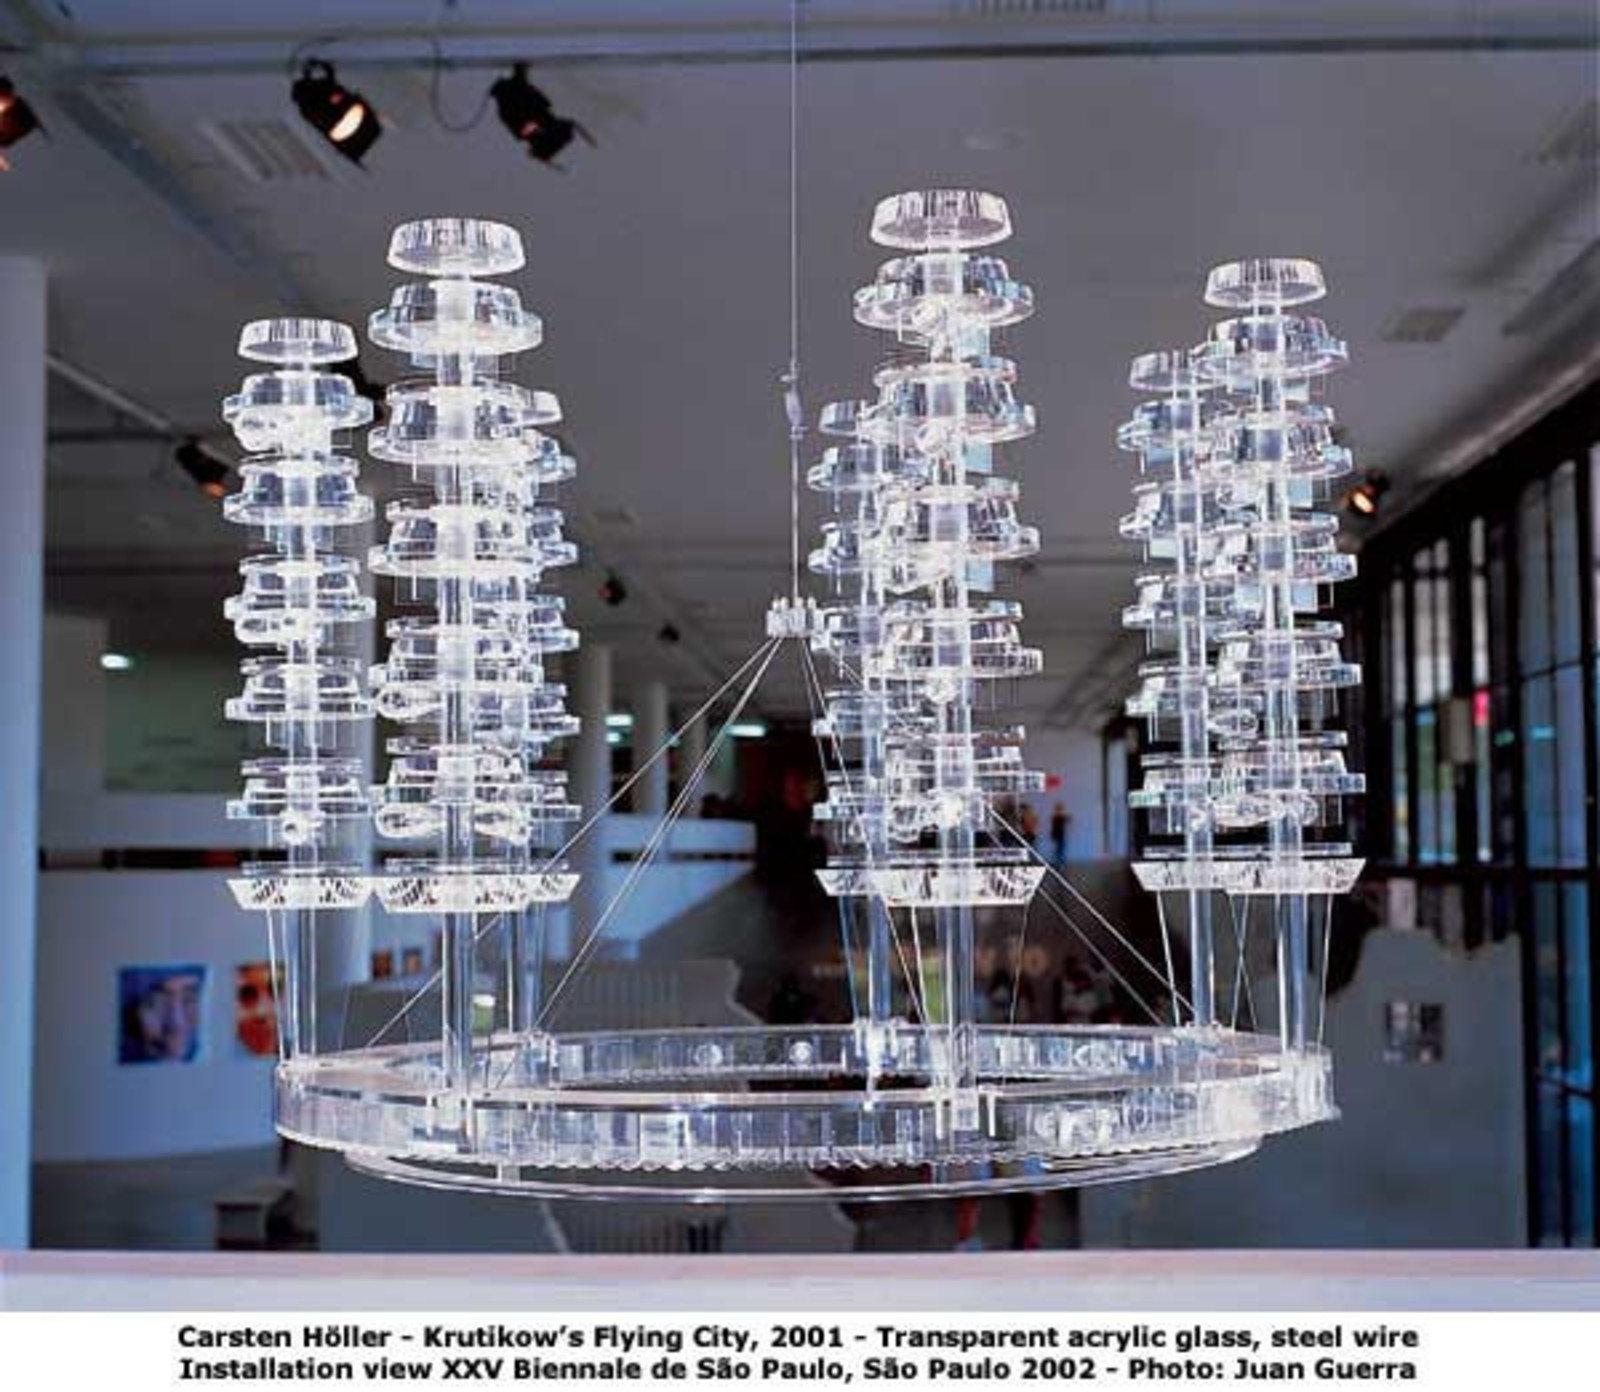 Krutikow ’s Flying City. 2001. Transparent acrylic glass, steel wire